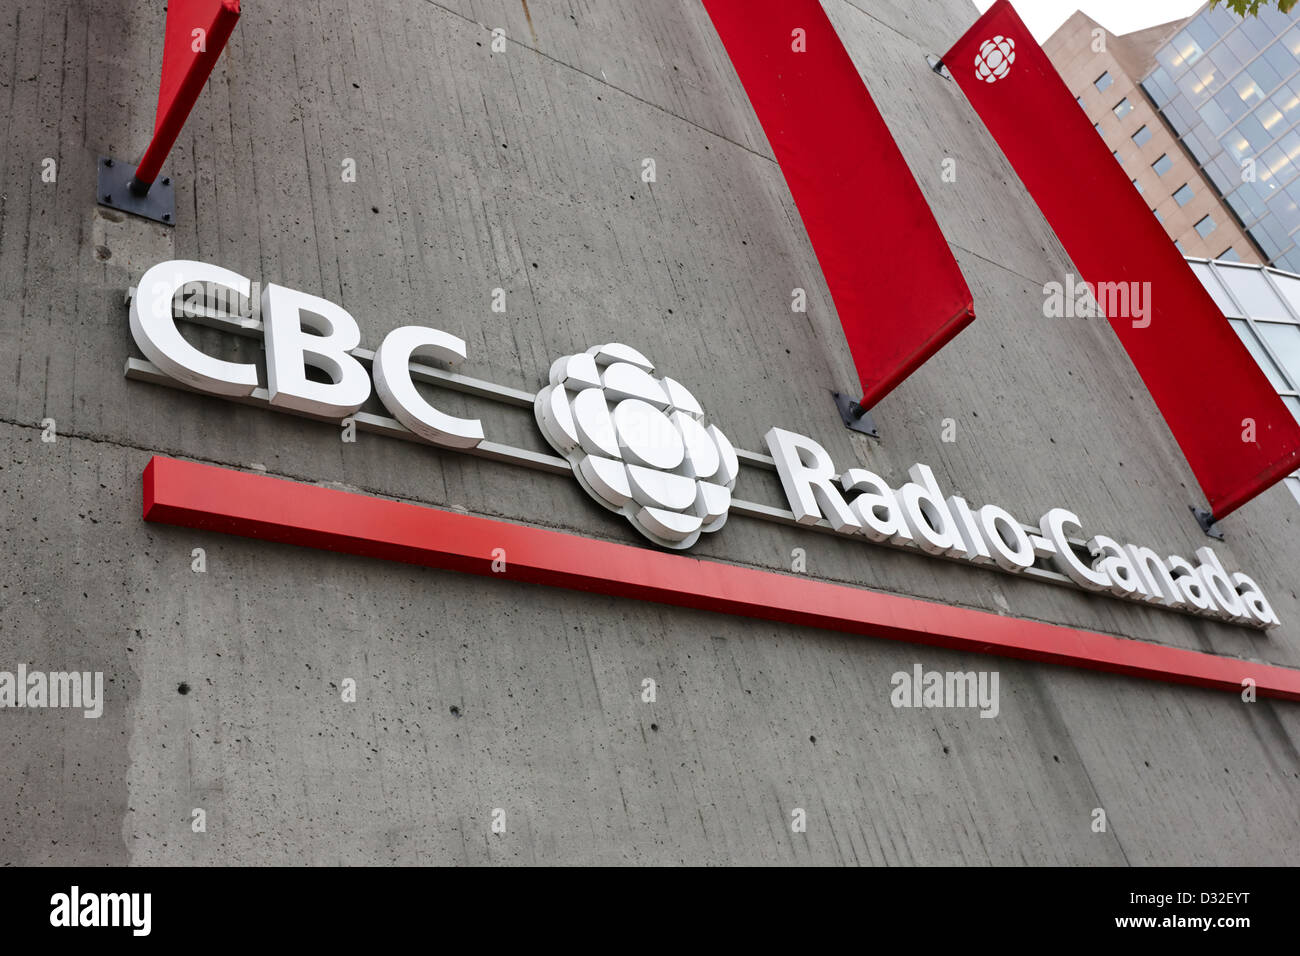 cbc radio canada logo Vancouver BC Canada Stock Photo